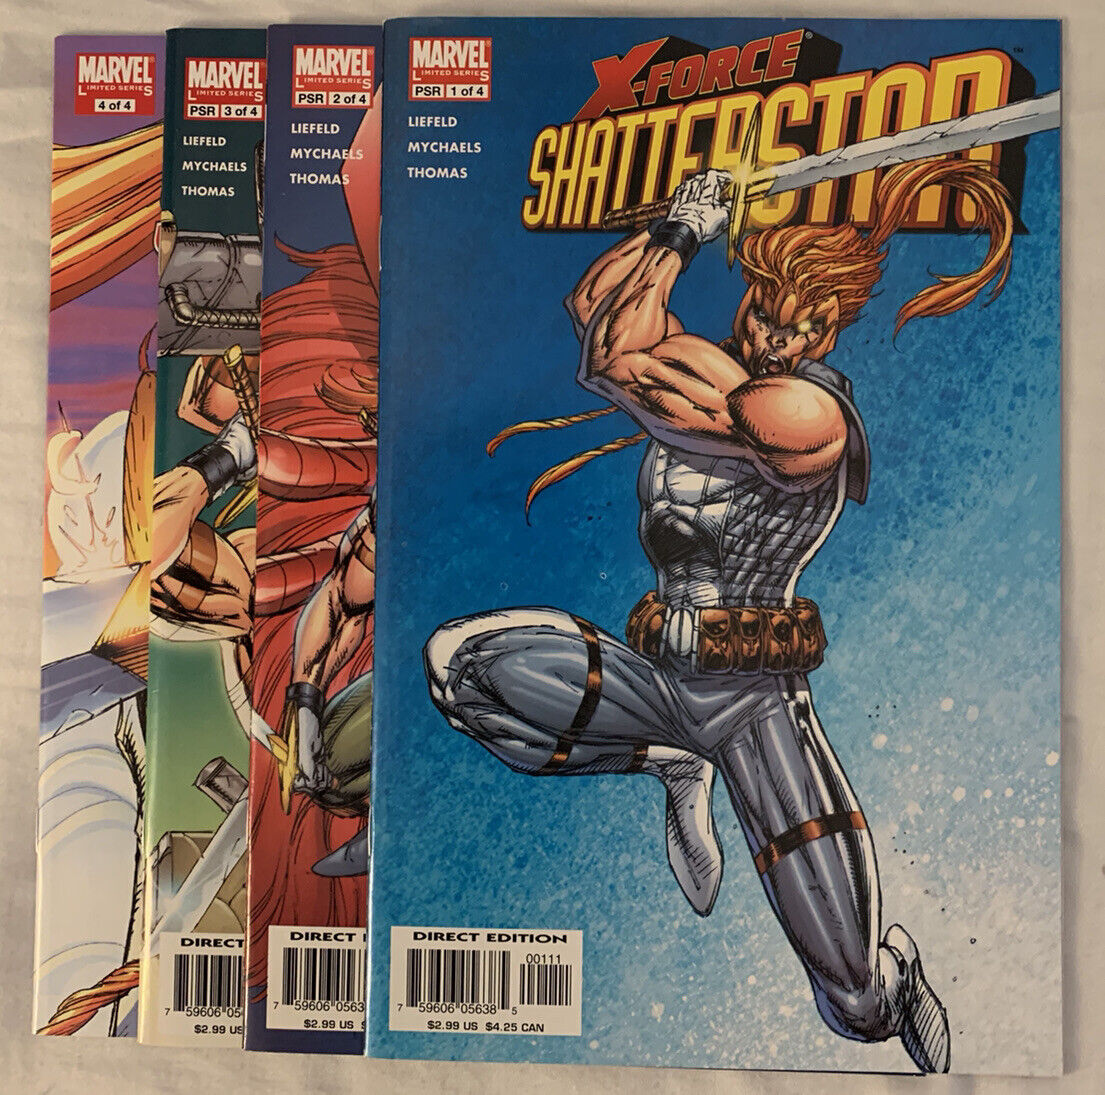 X-Force Shatterstar #1, 2, 3 & 4 of 4 Marvel Comics by Brandon Thomas 2005